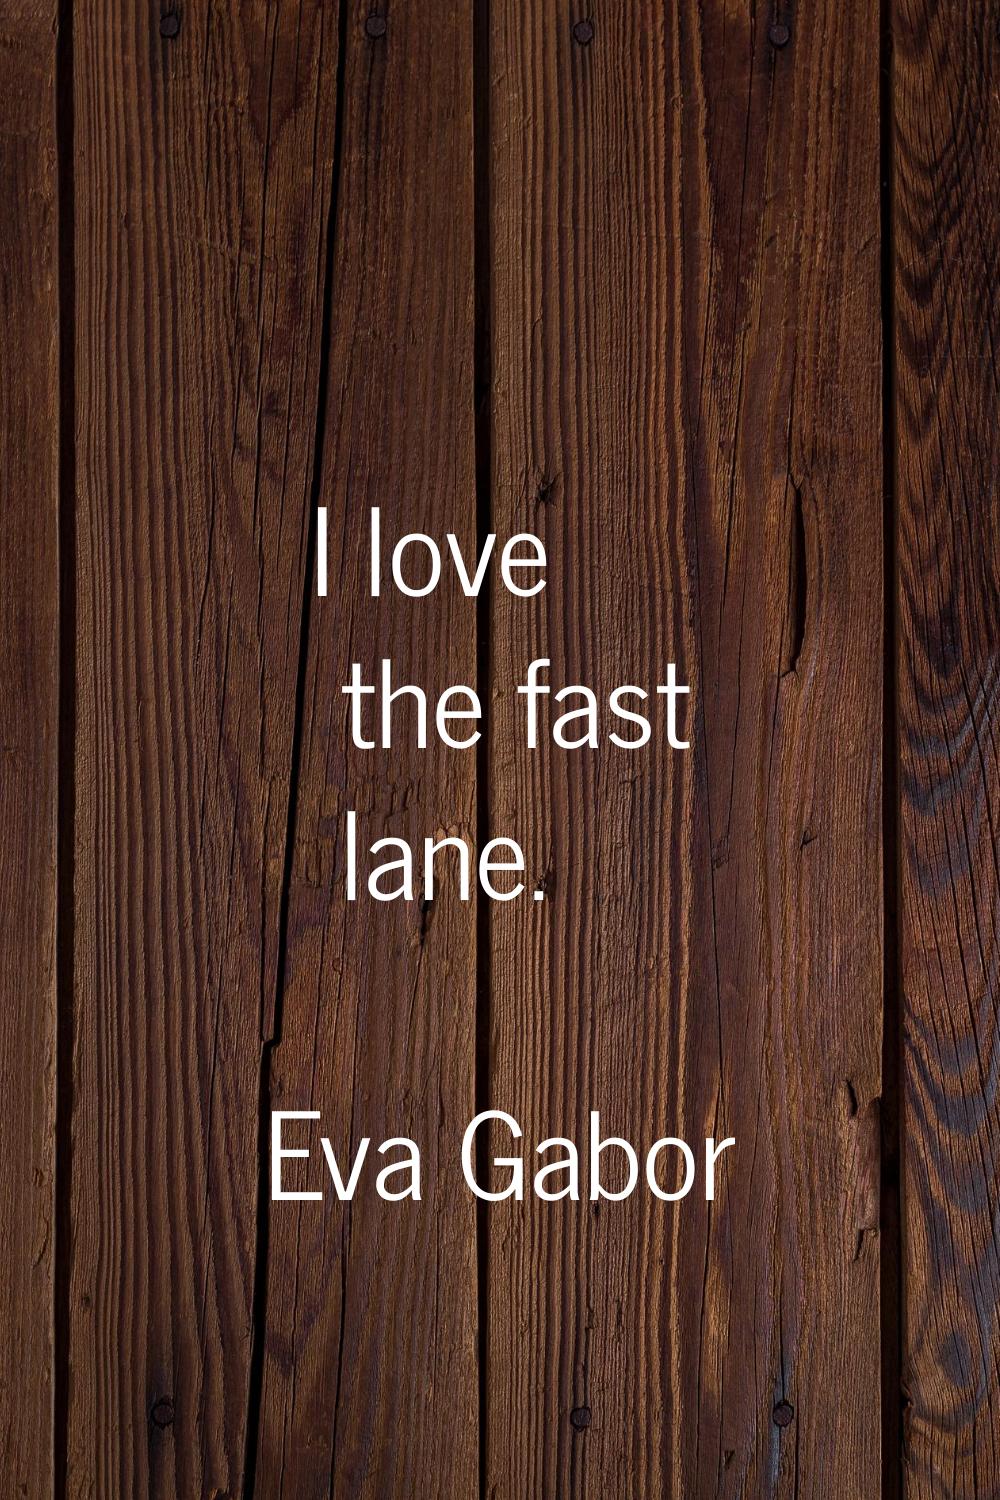 I love the fast lane.